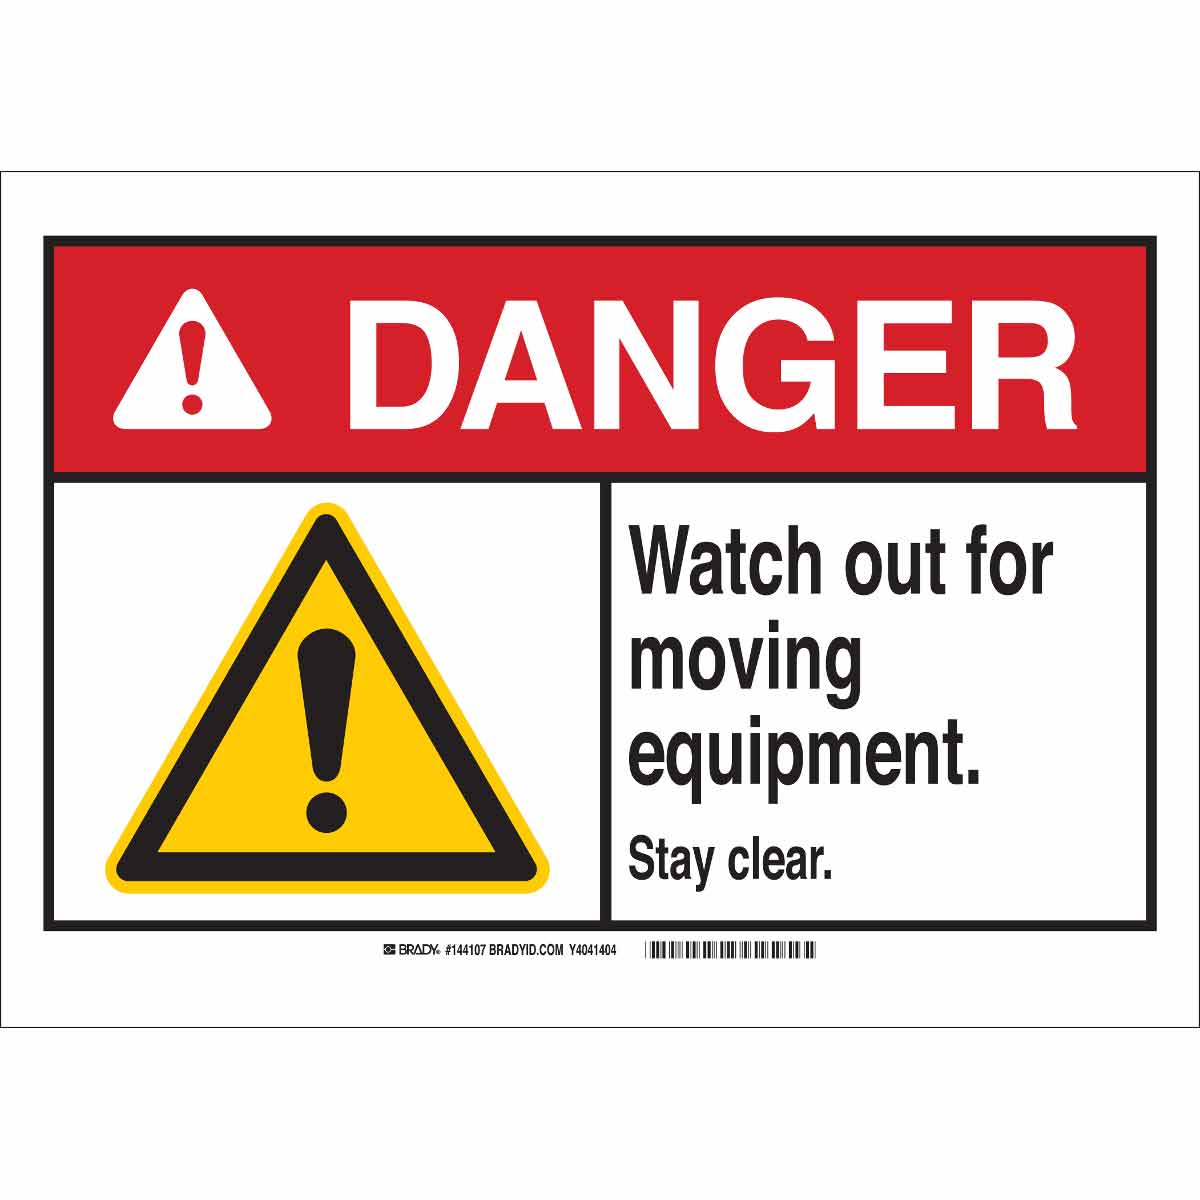 Stay clear. Danger sign. Hazardous waste. Danger Label Electric. Hazmat signs.